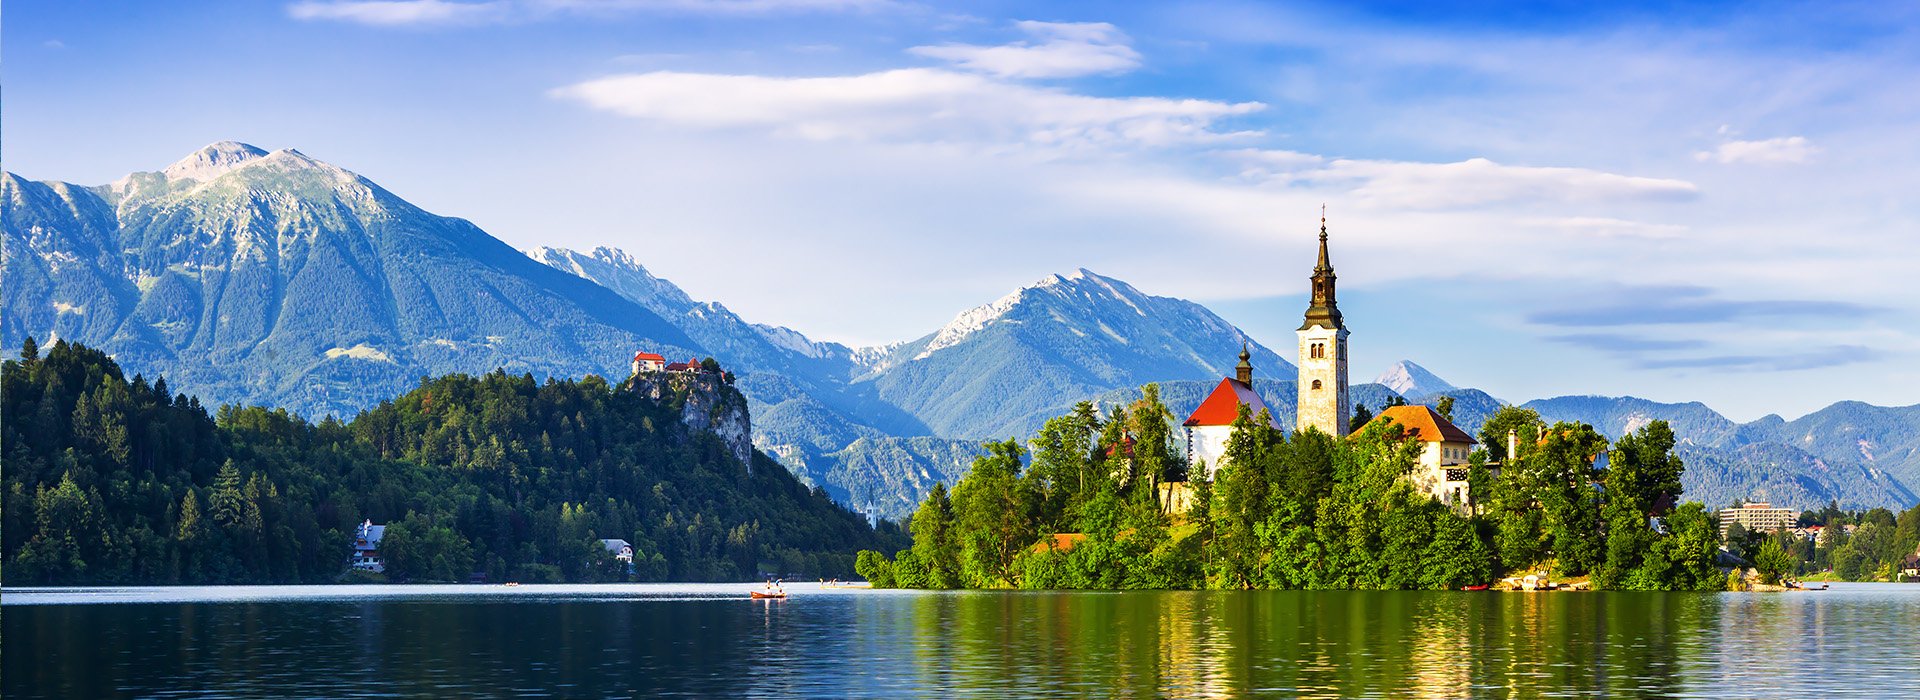 Travel Restrictions Update: Slovenia